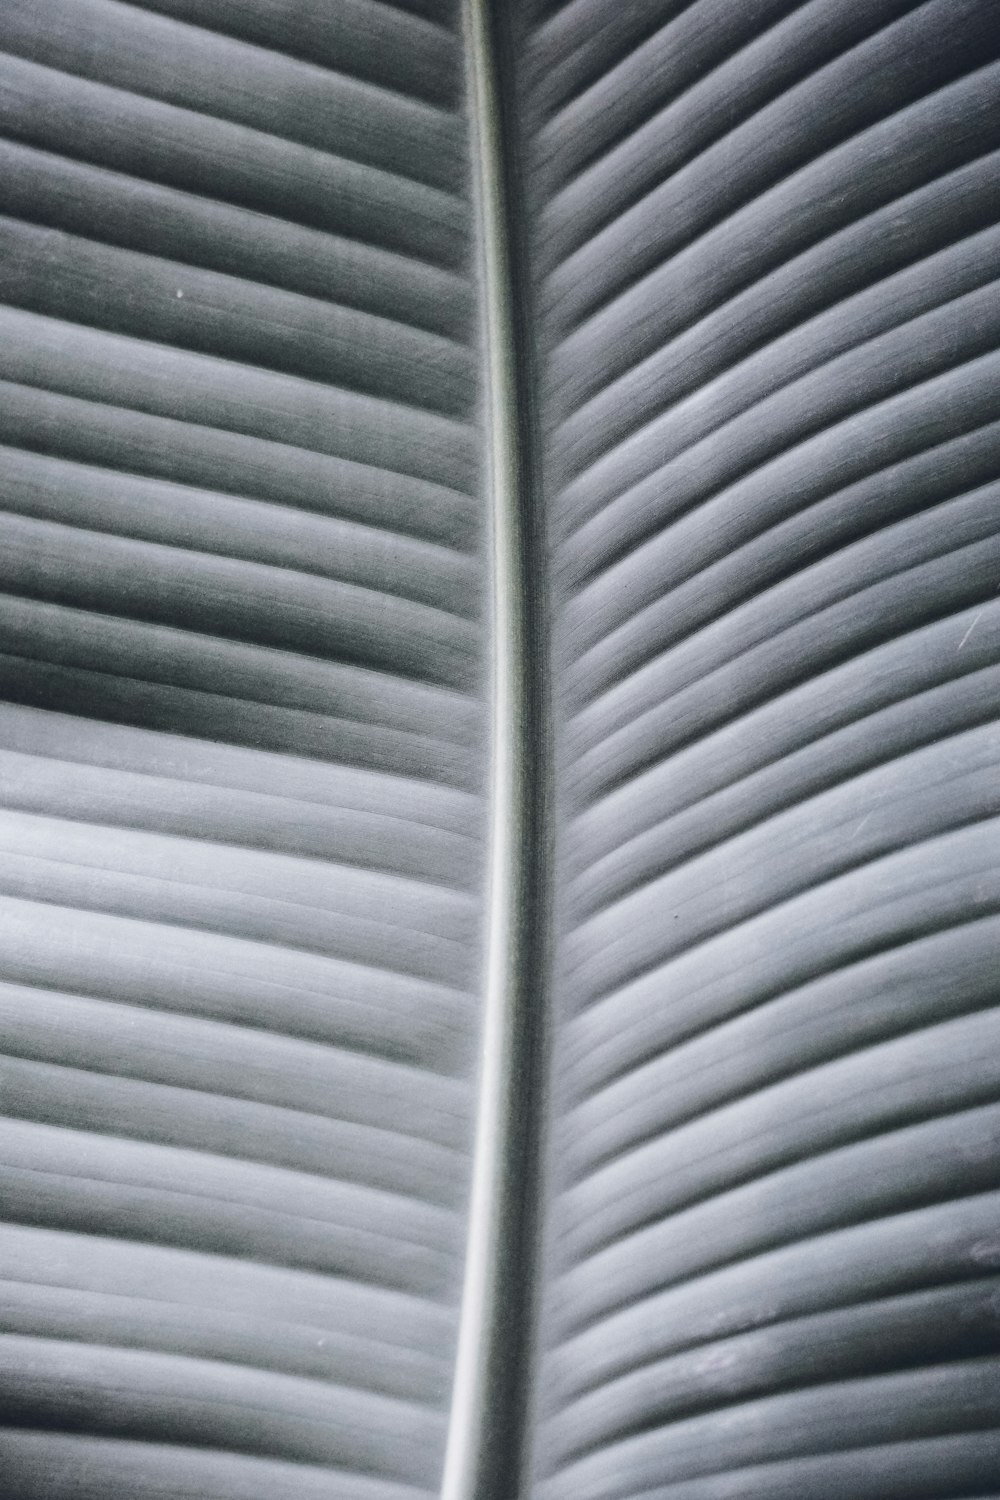 a black and white photo of a banana leaf